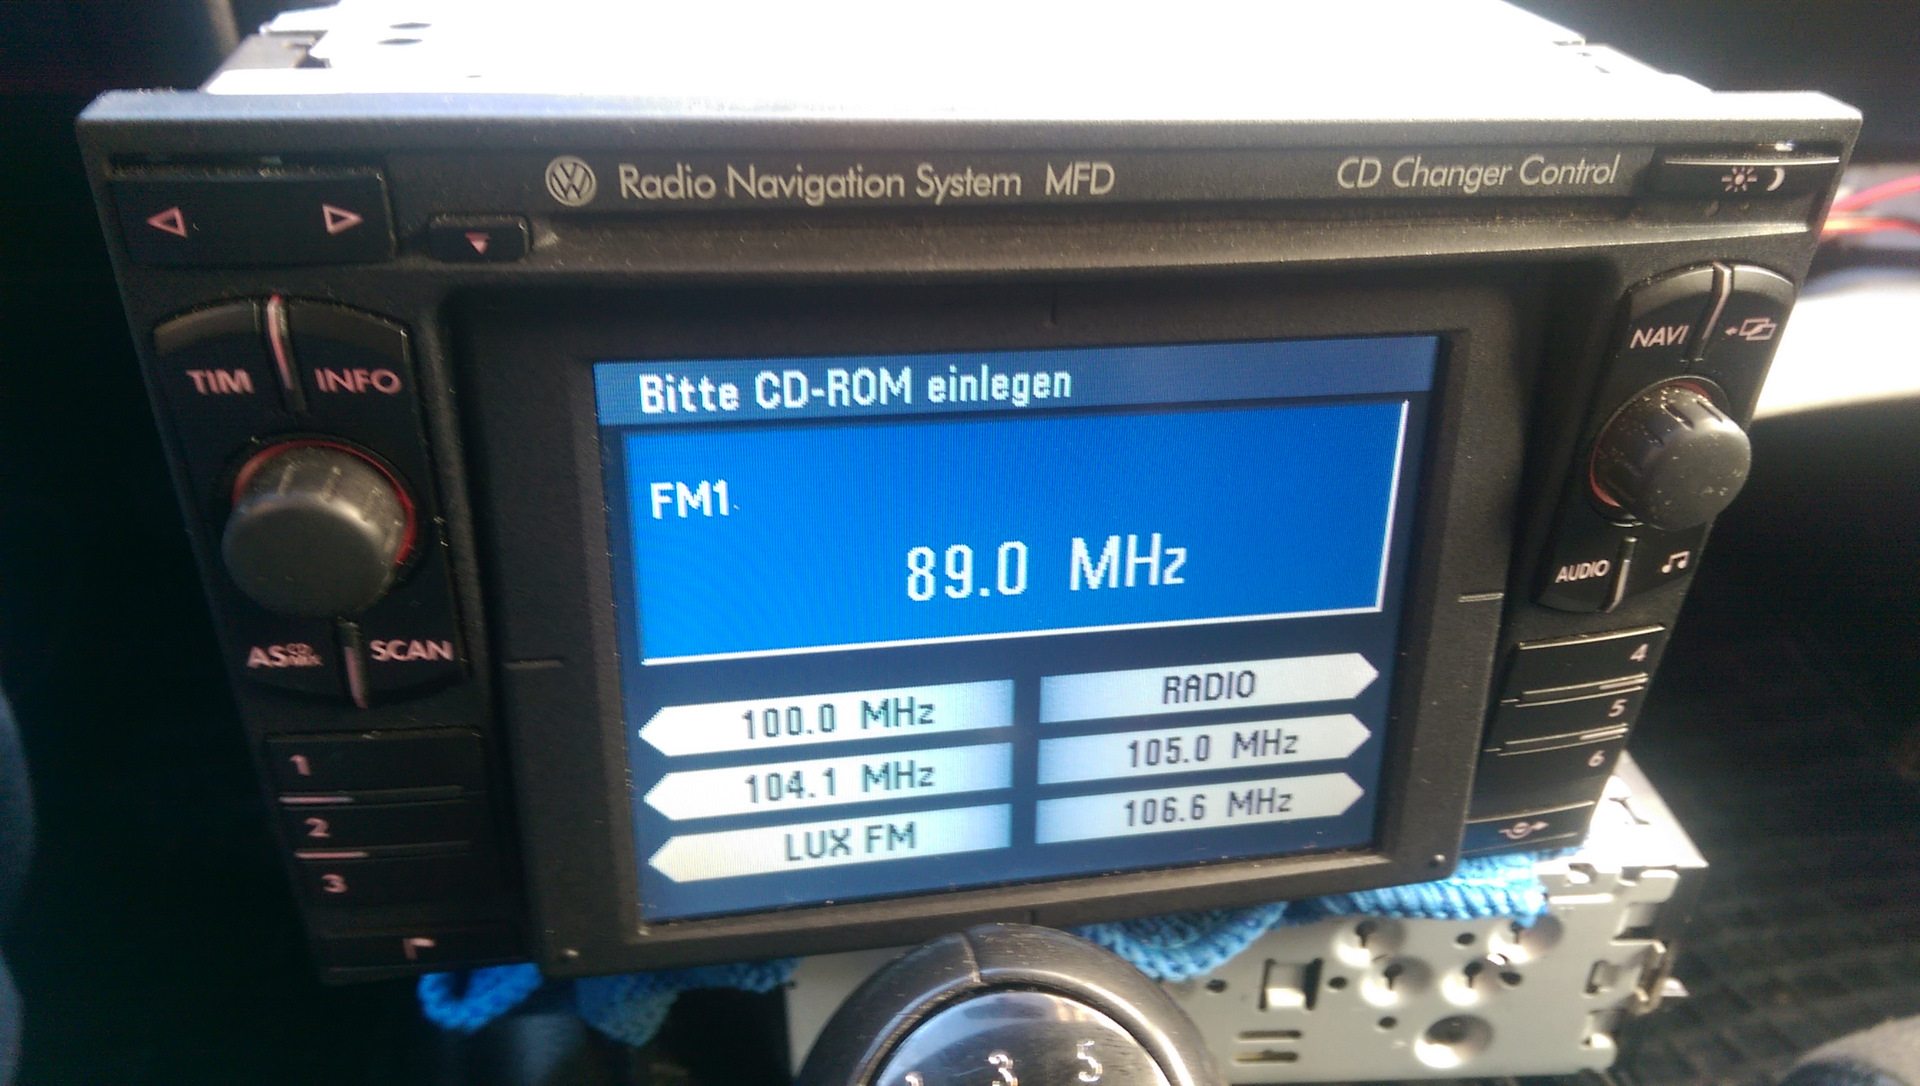 Vw radio navigation system mfd cd download